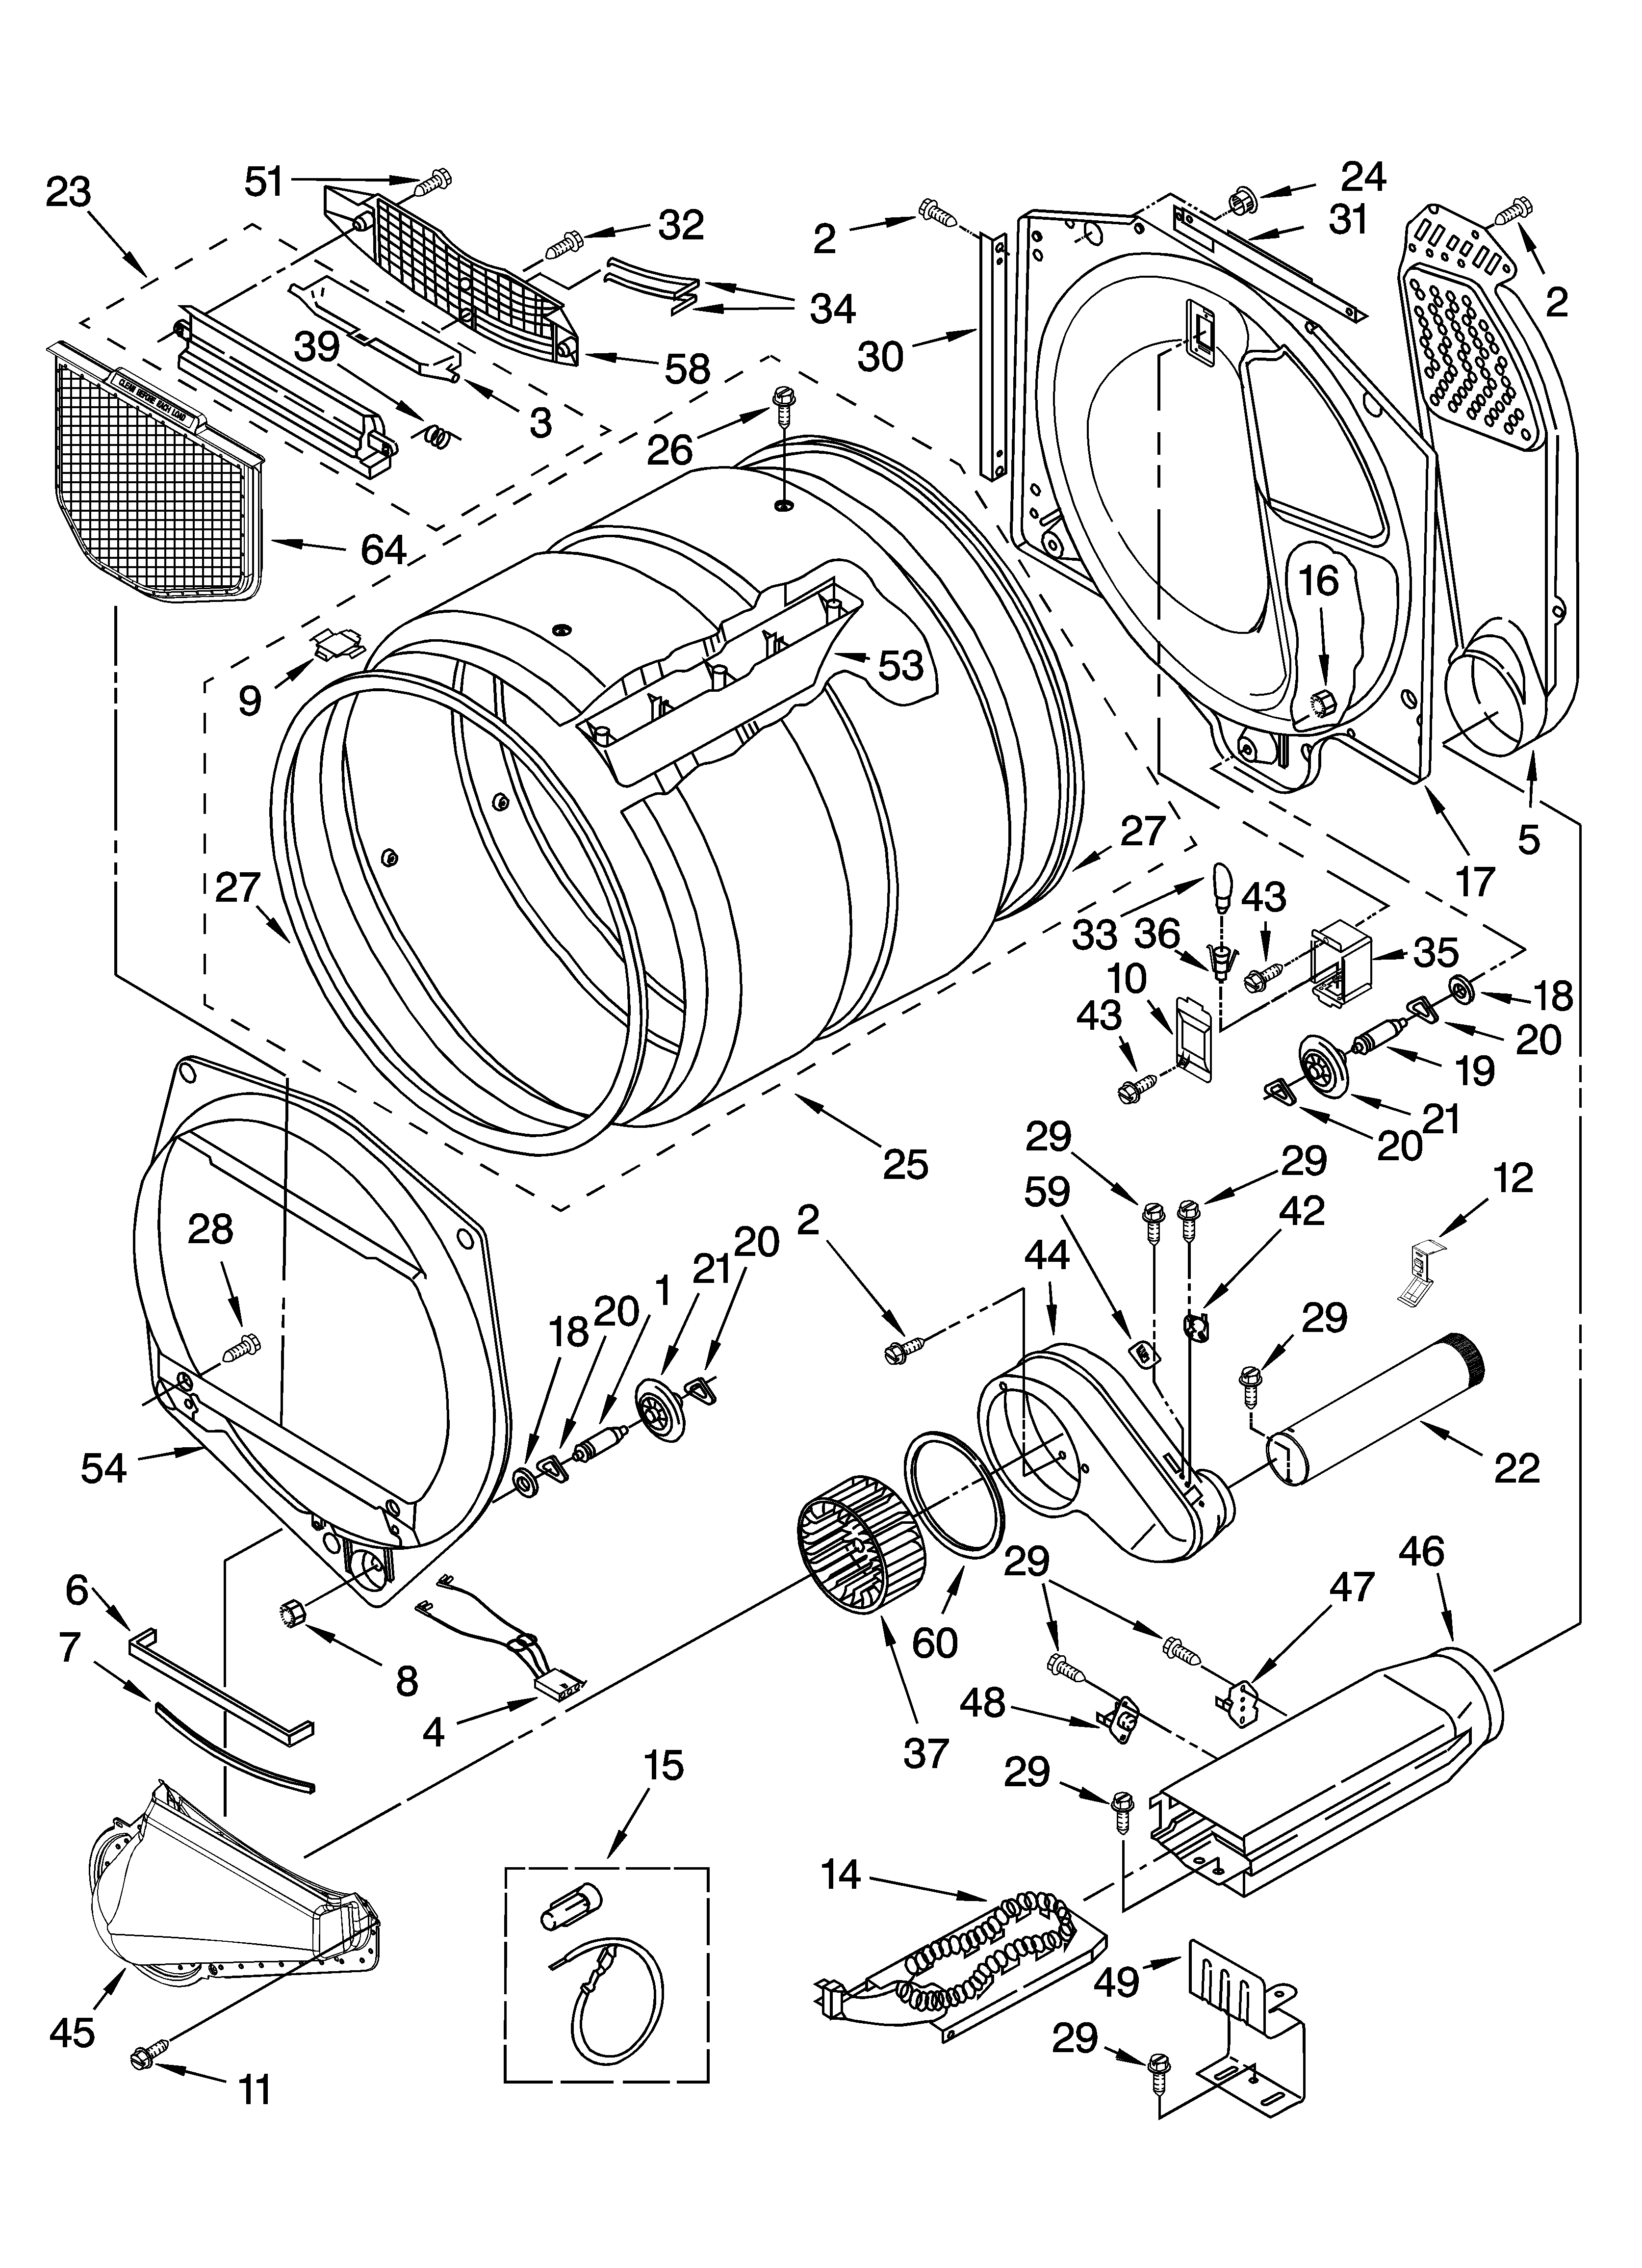 Electric Dryer Wiring Diagram